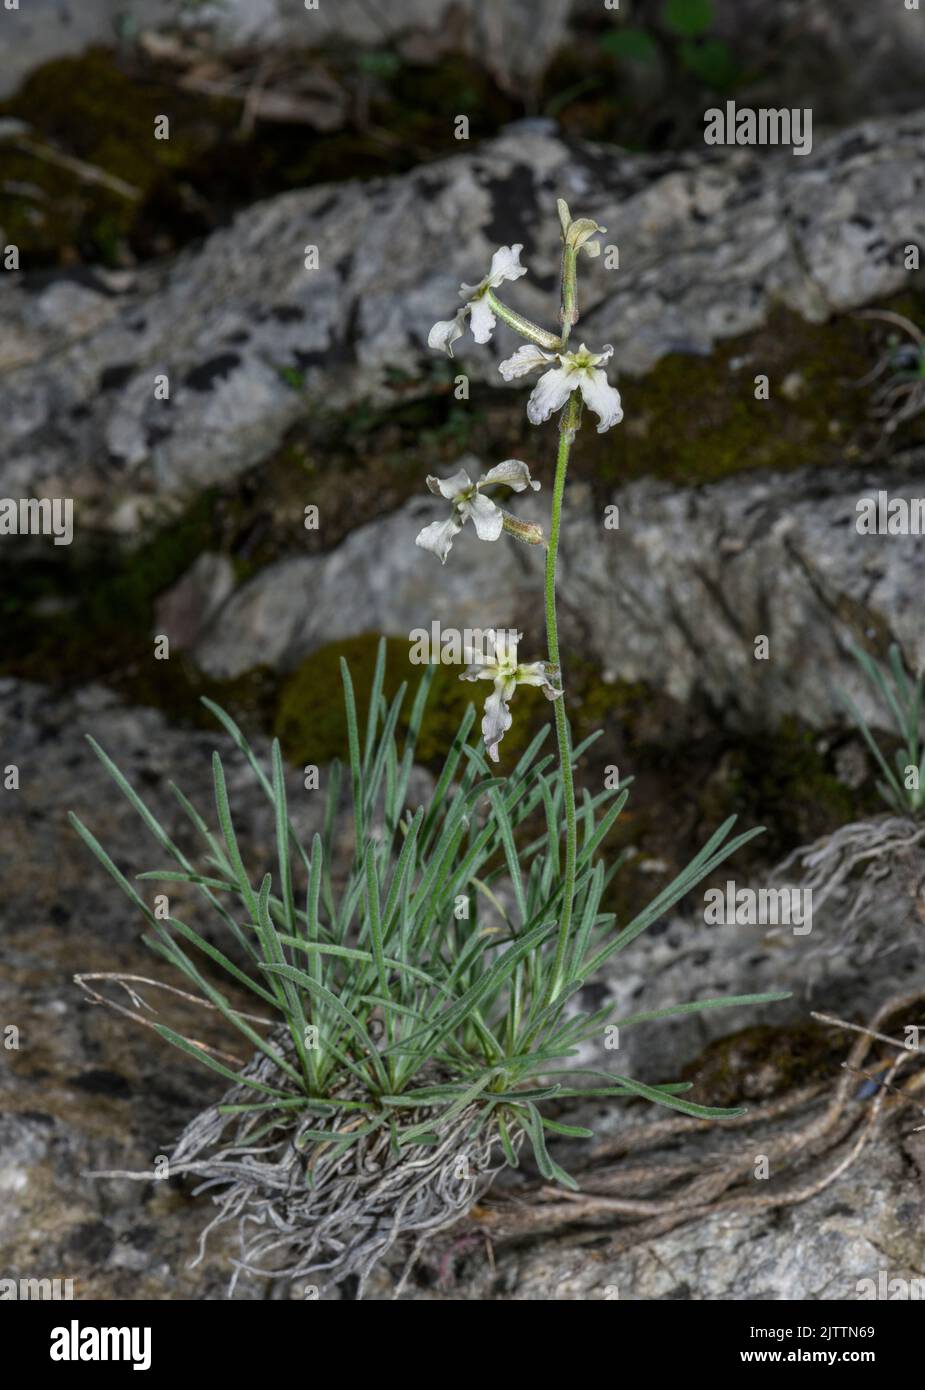 Sad Stock, Matthiola fruticulosa in flower on limestone, Greece. Stock Photo